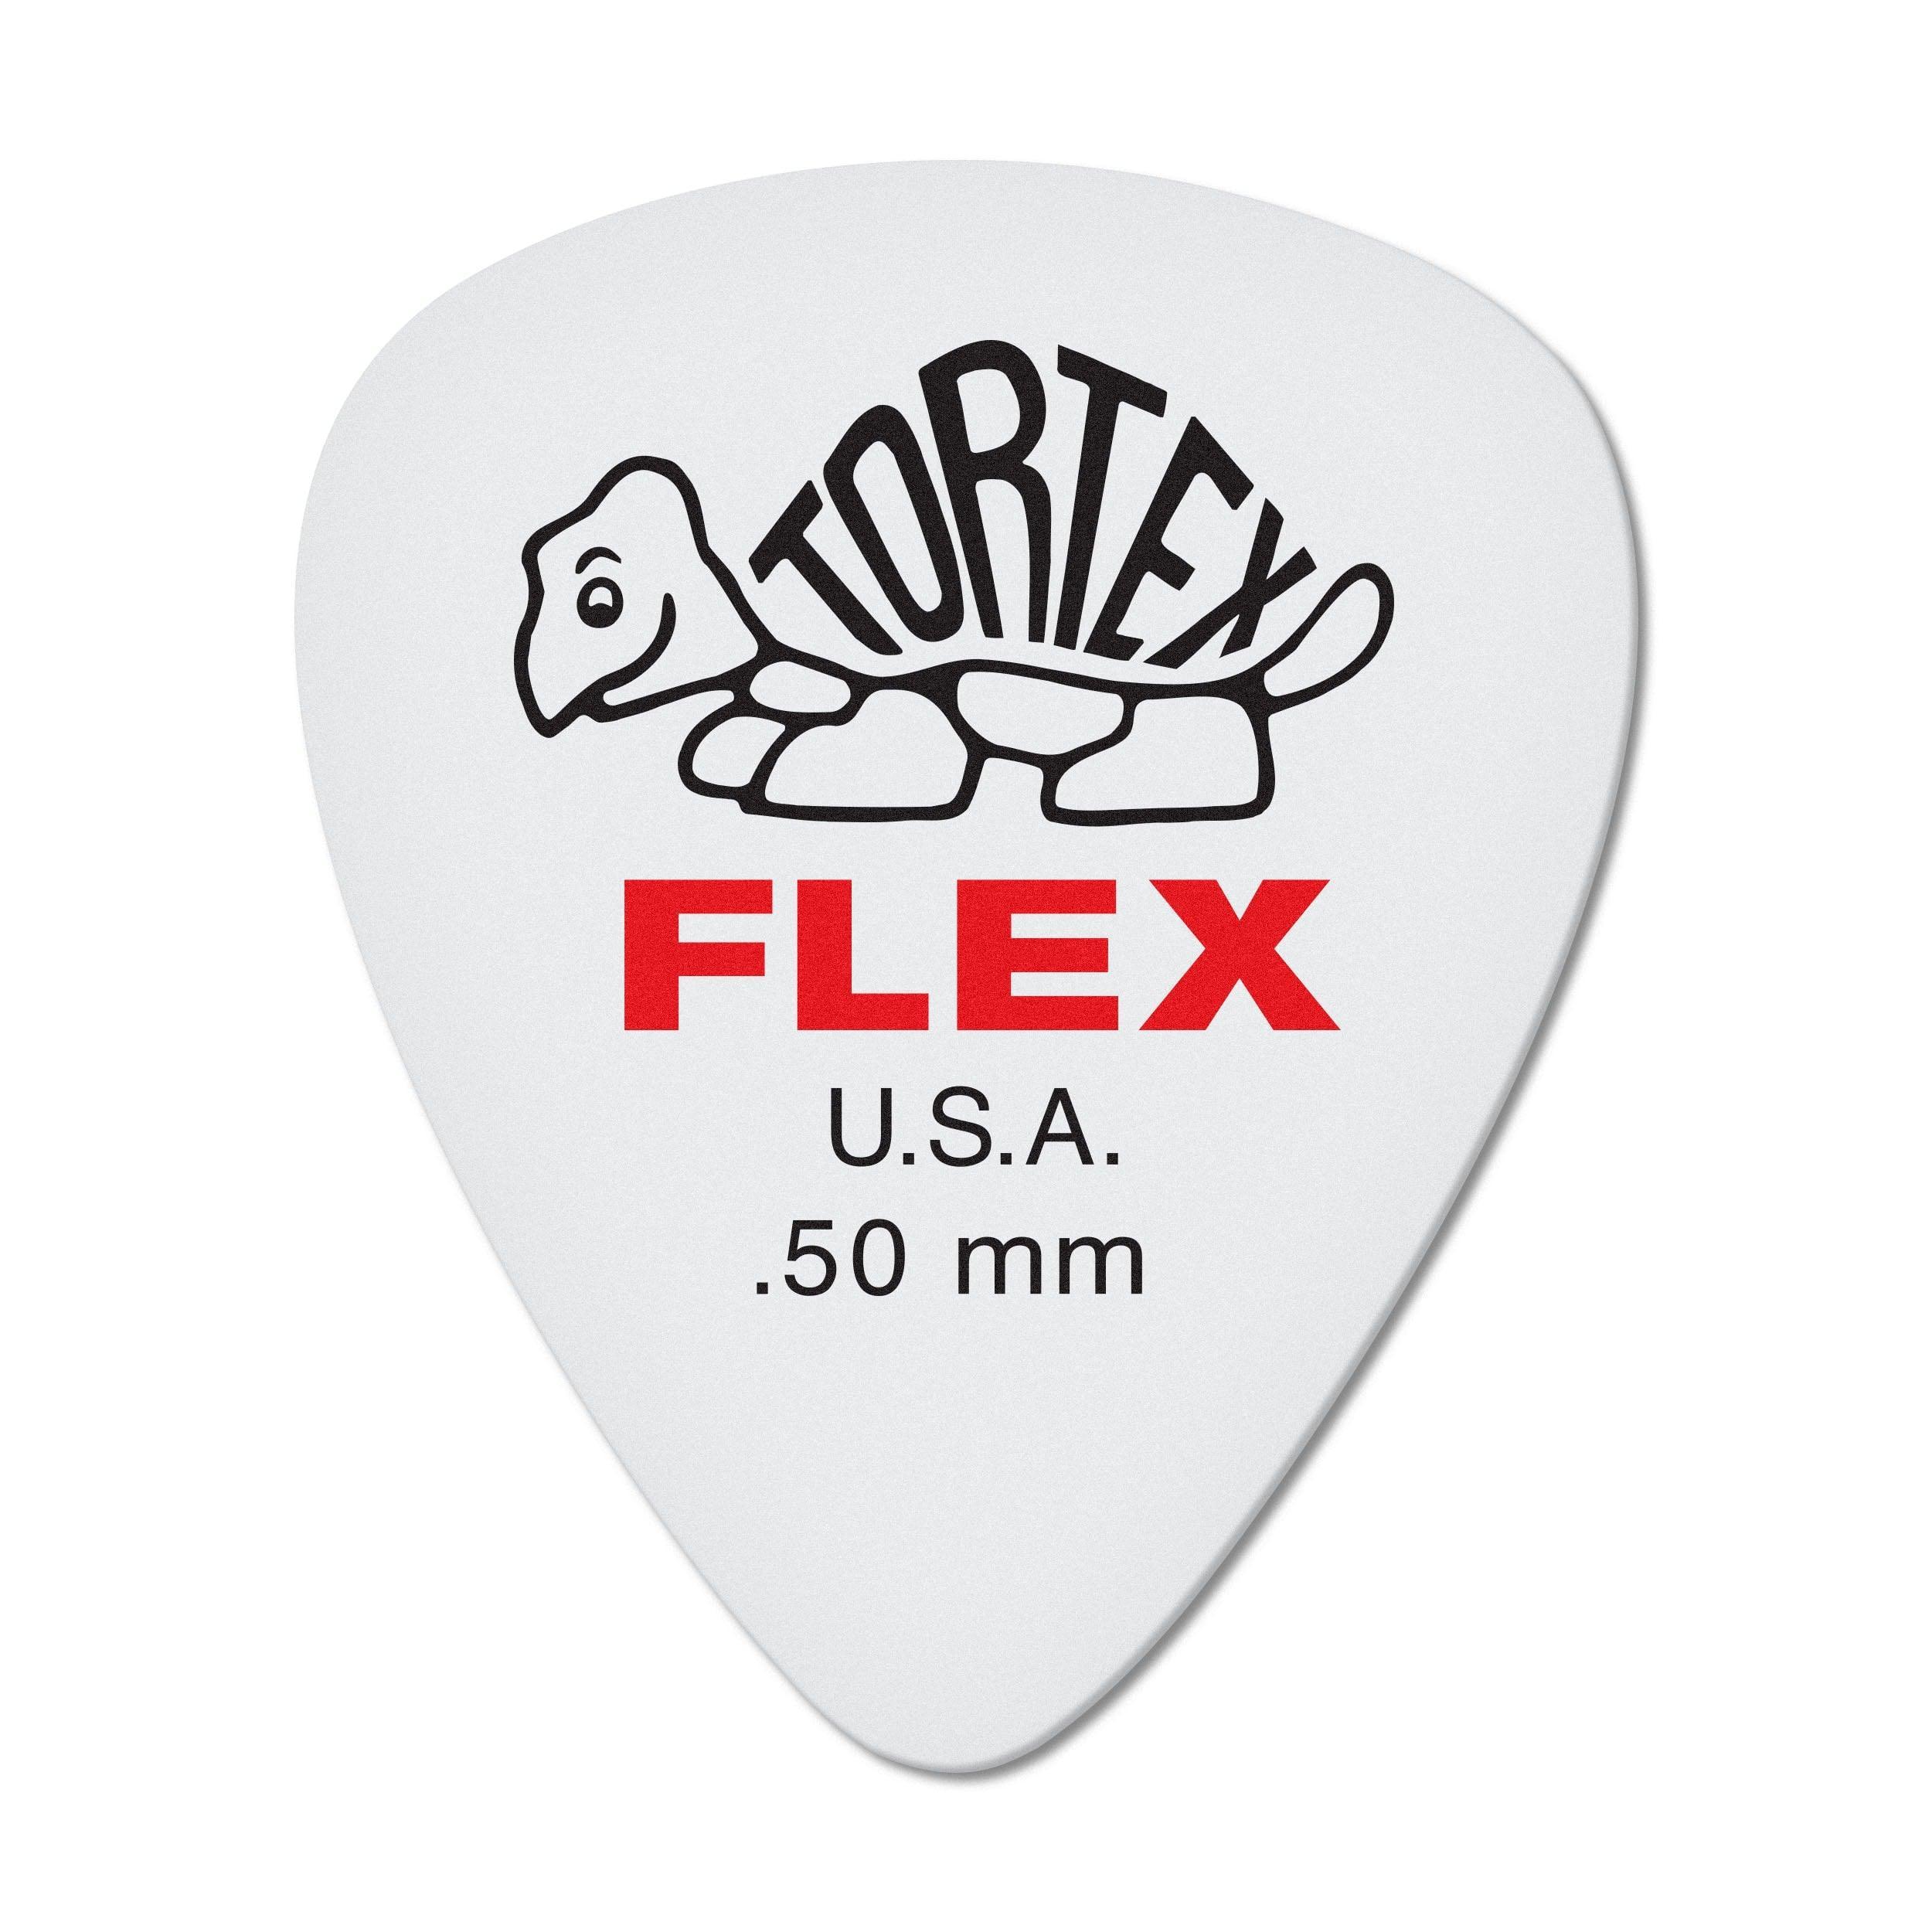 Tortex Flex .50 - Guitars - Picks by Dunlop at Muso's Stuff